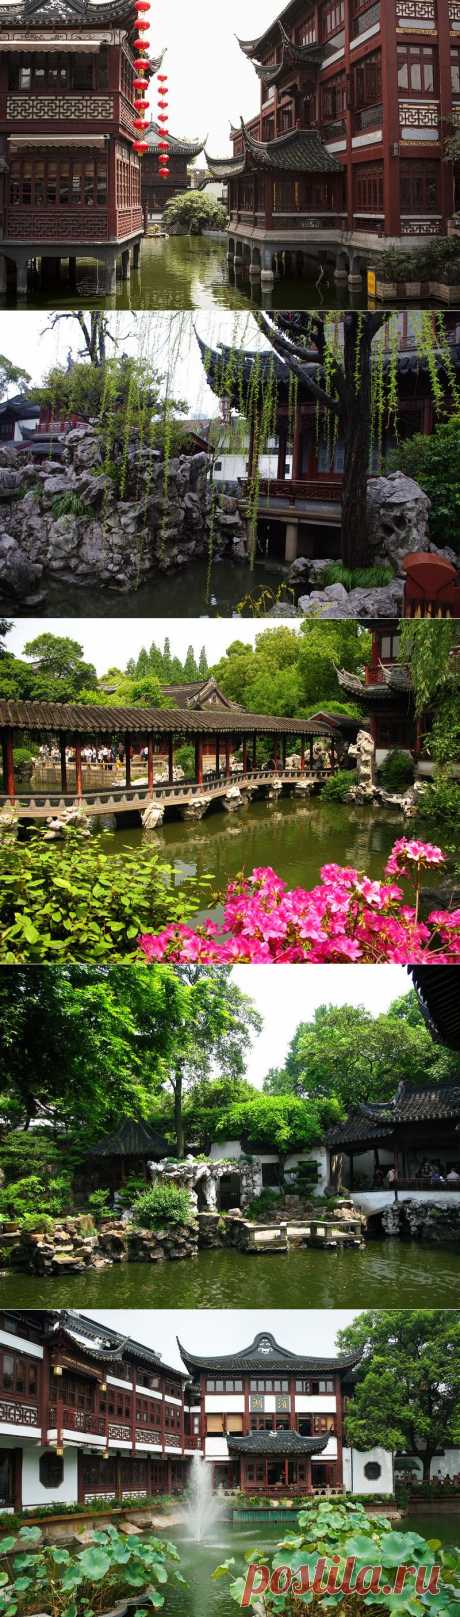 Сад Радости (Yuyuan Garden) в парке Юйюань. Шанхай, Китай.